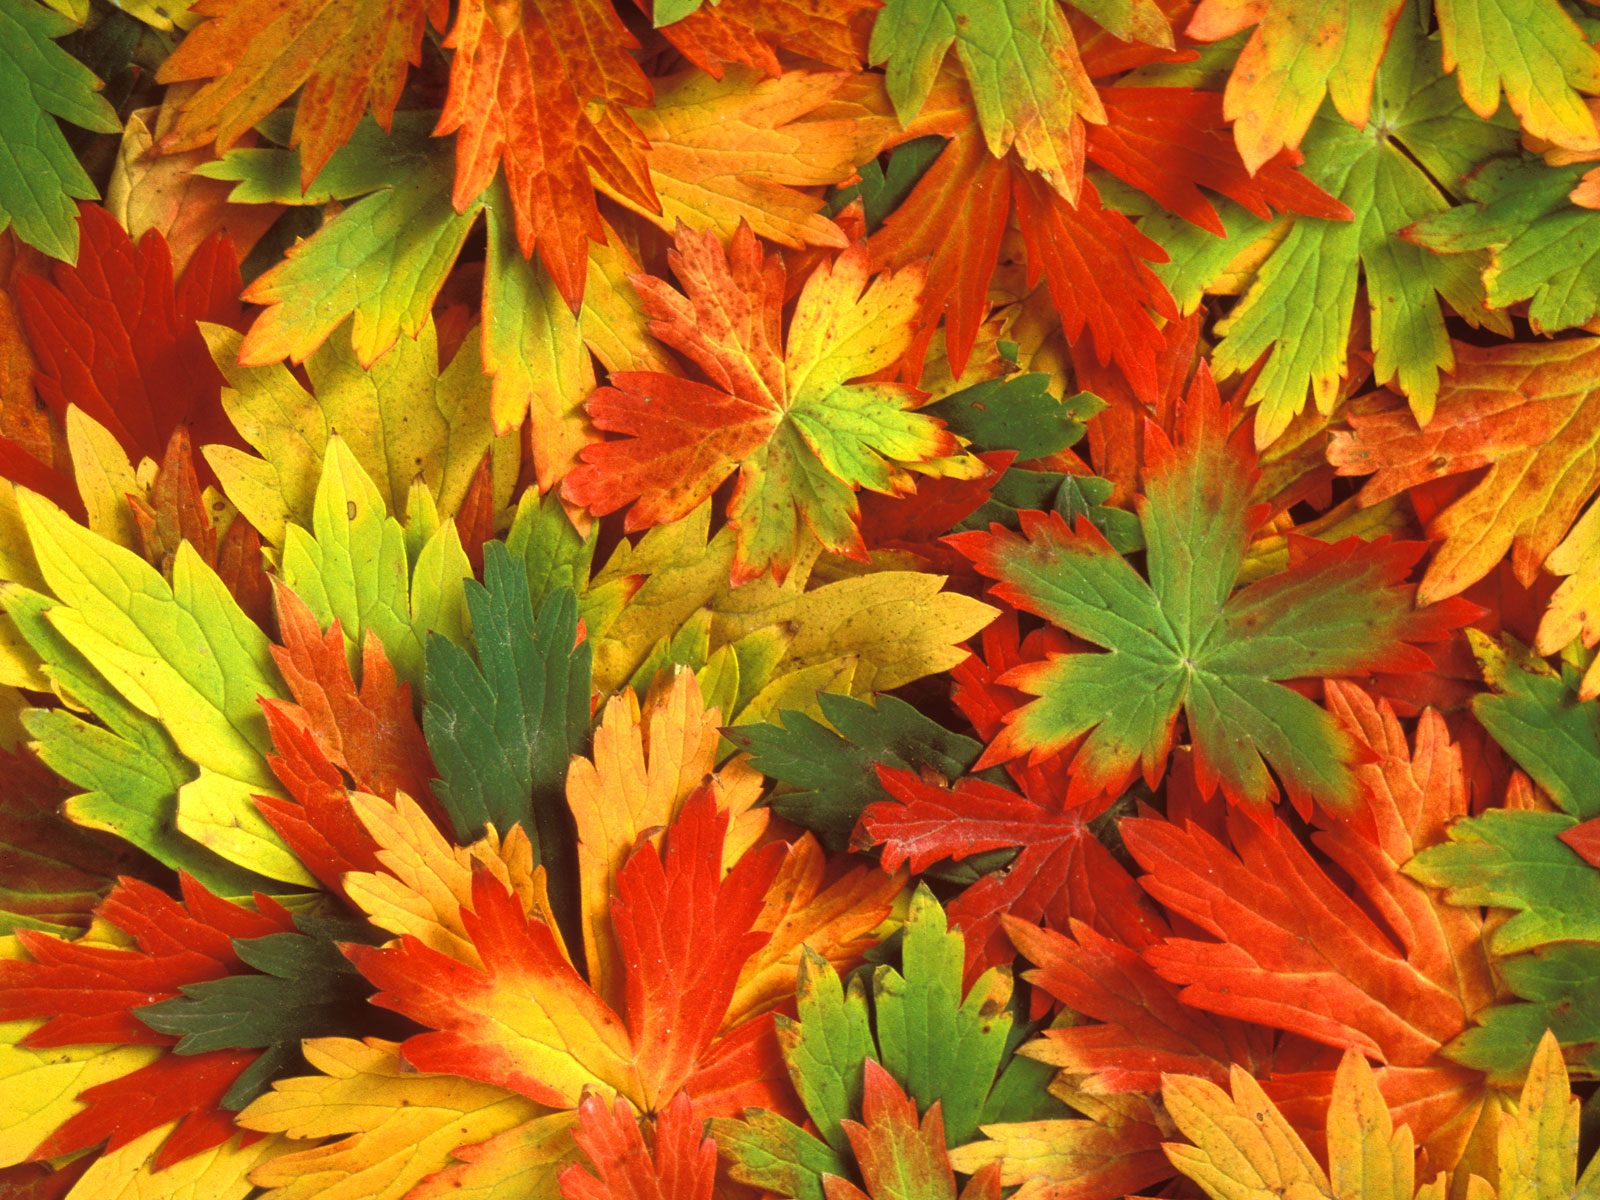 Kaleidoscope of Fall